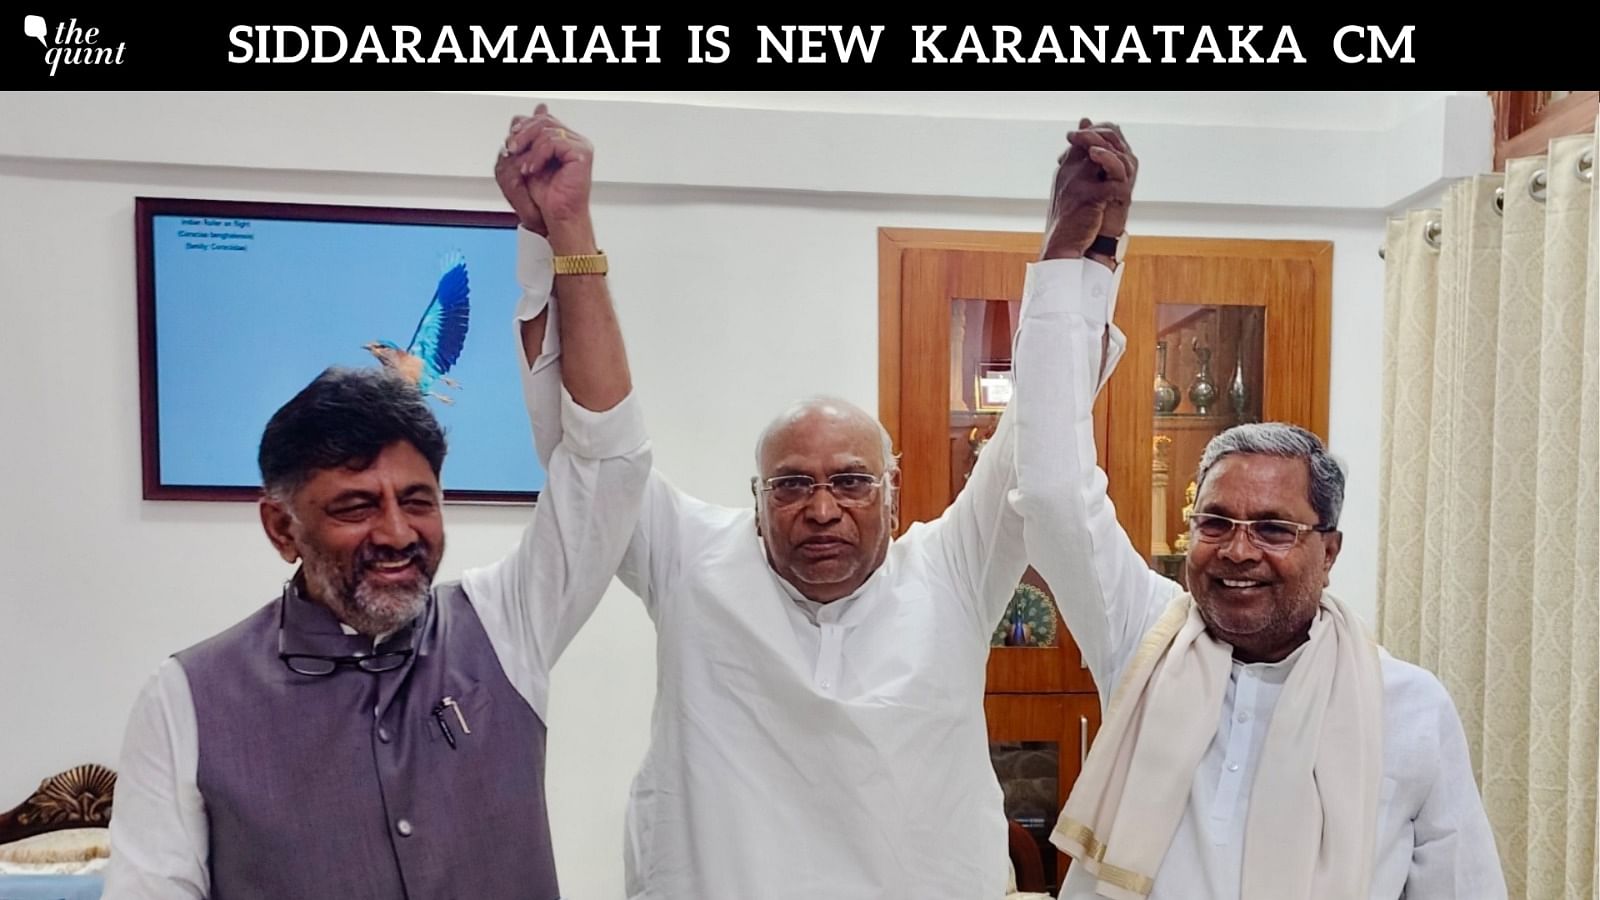 <div class="paragraphs"><p>Siddaramaiah Declared New Karnataka CM, DK Shivakumar to be Deputy</p></div>